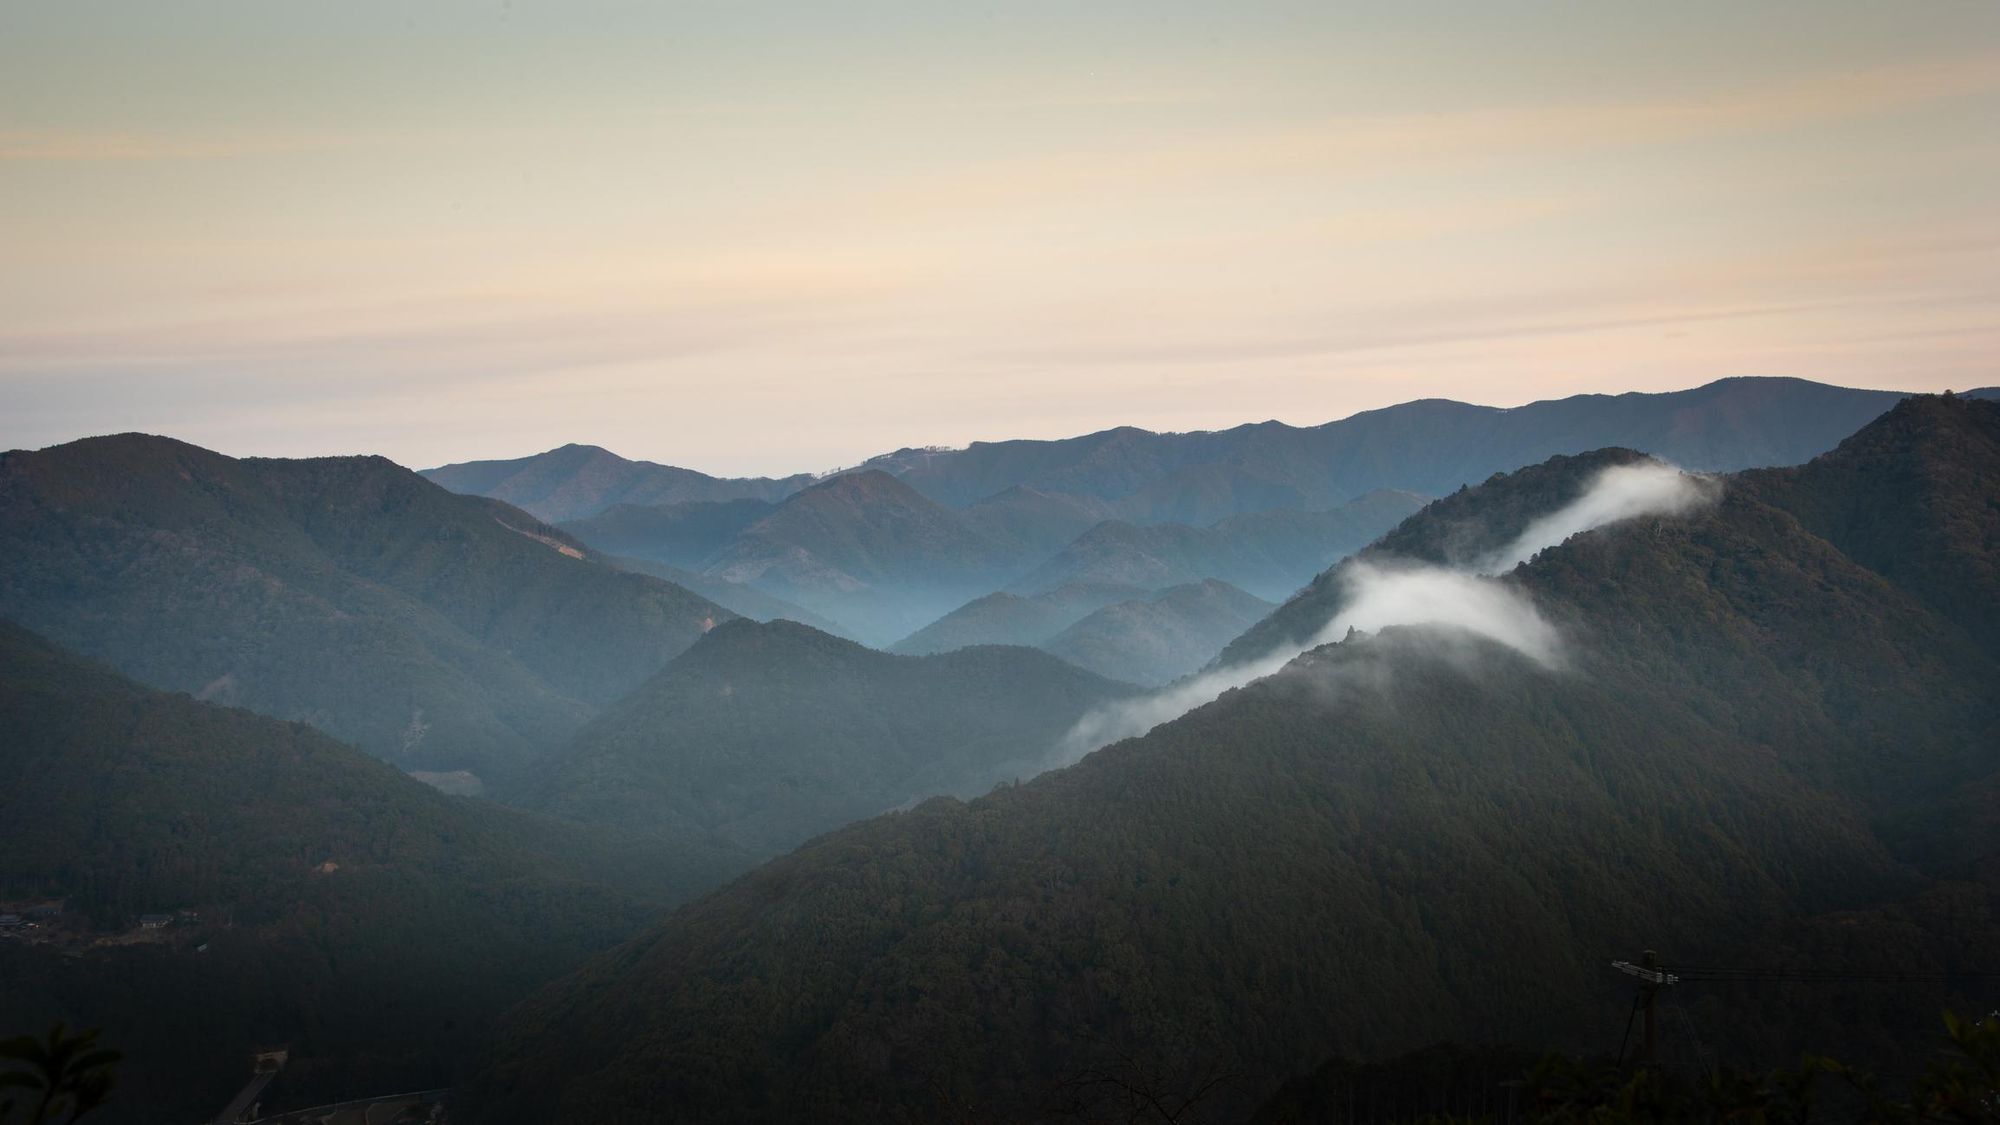 The Ancient Pilgrim Trails Through Japan's Sacred Mountains